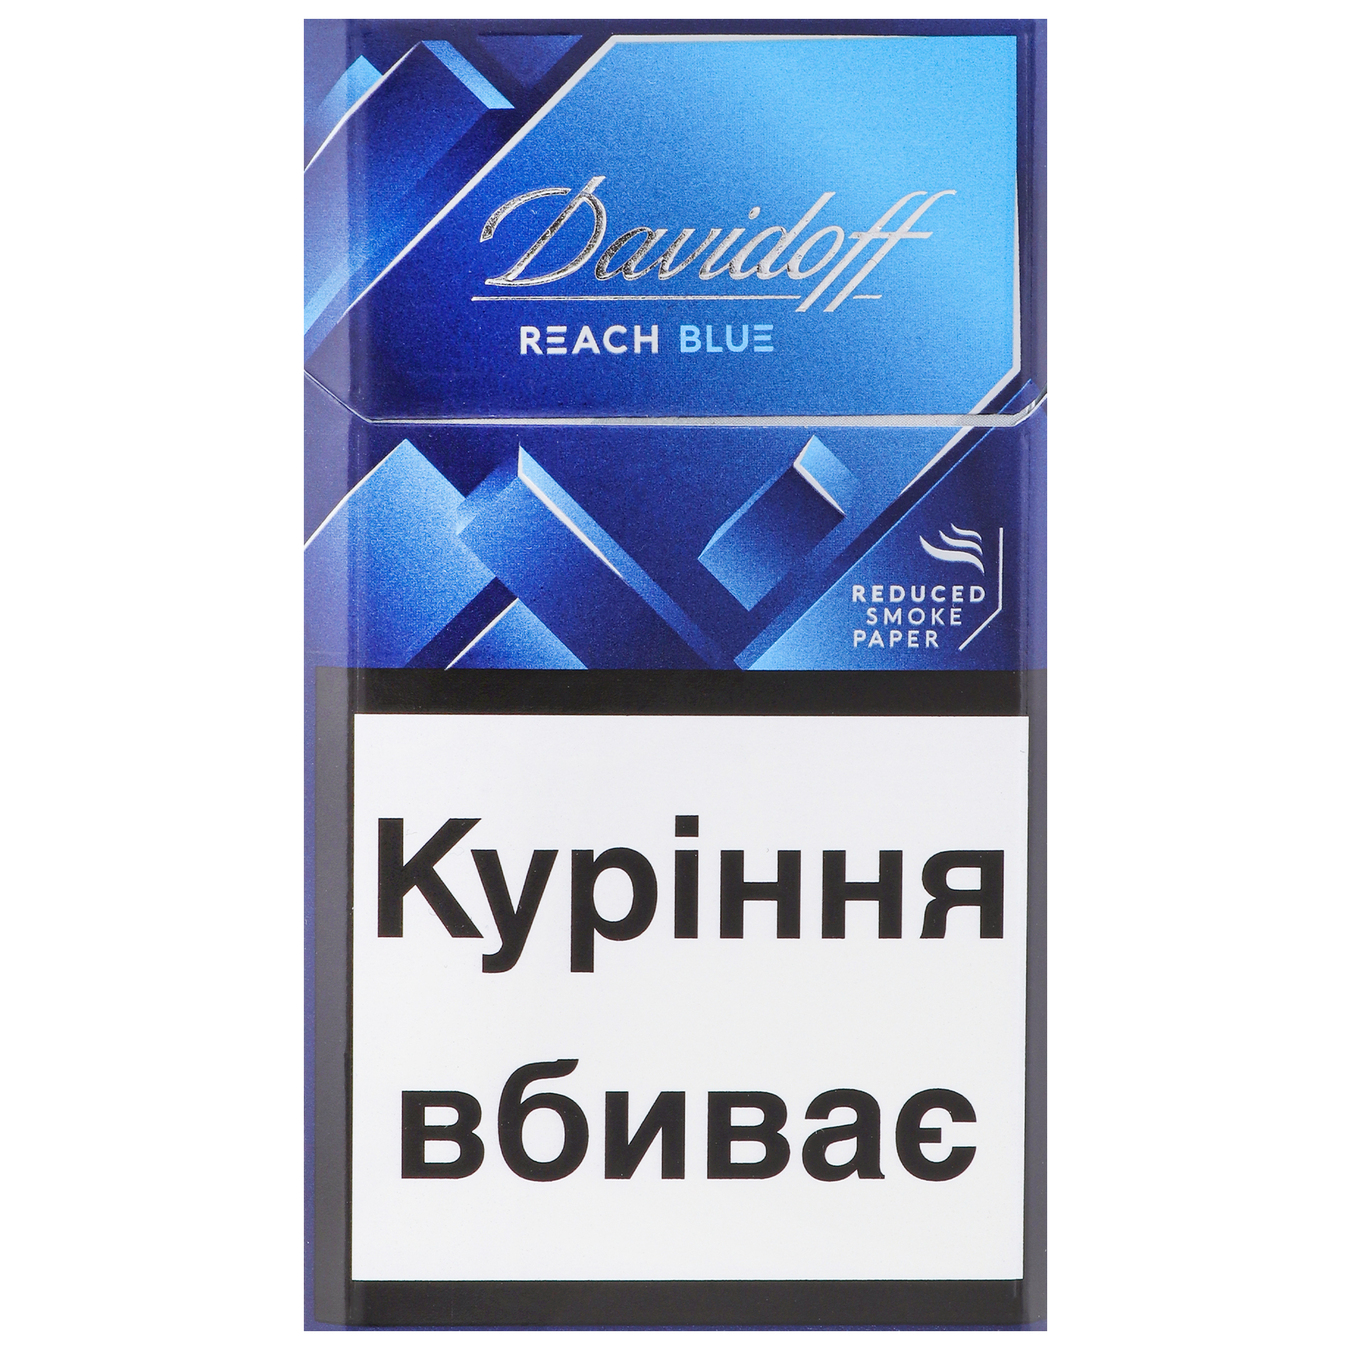 Сигареты Davidoff Reach BLUE 20шт (цена указана без акциза)